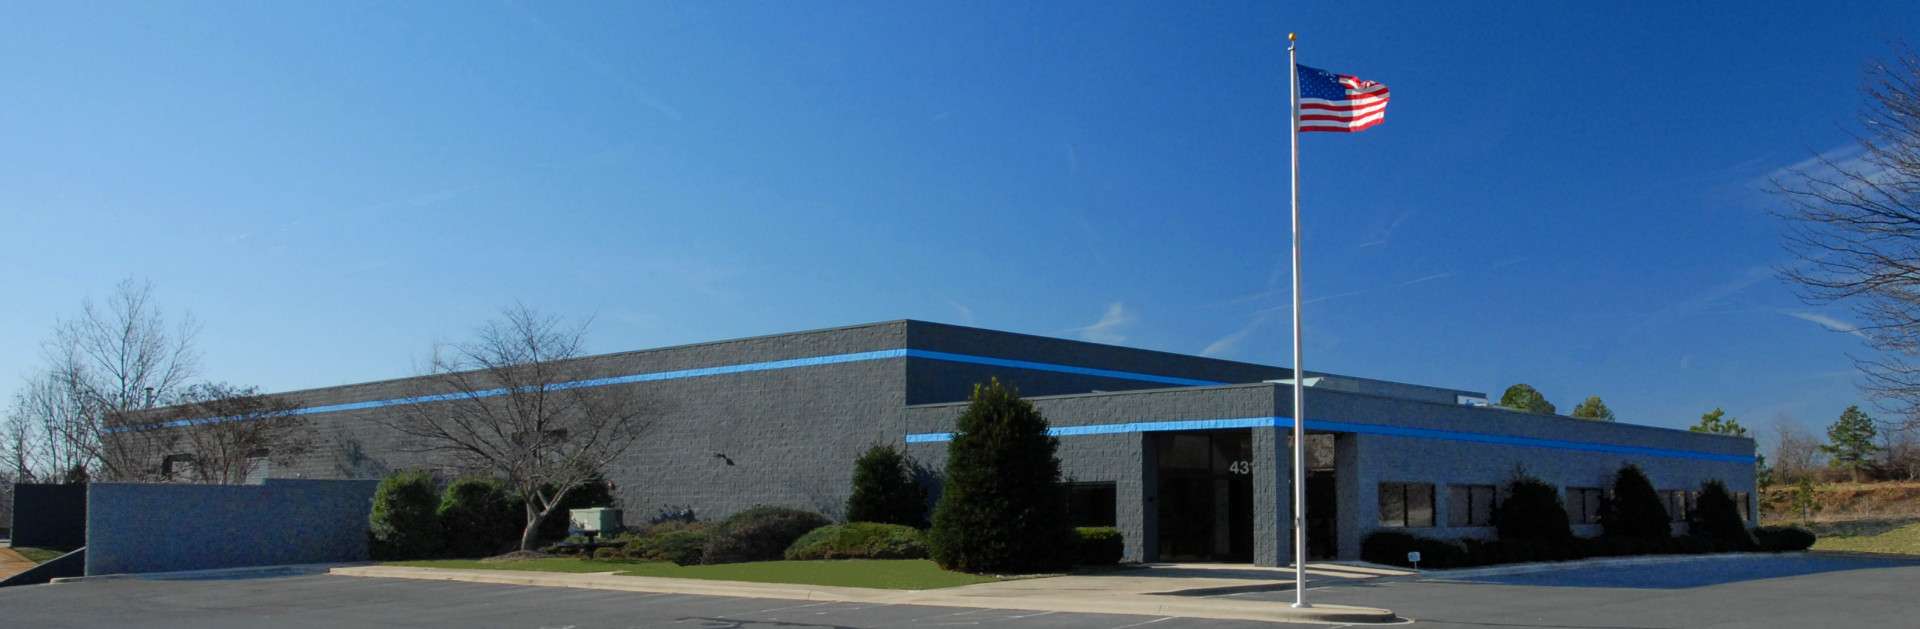 Power Cleaning Equipment Building Headquarters- Carolina Industrial Equipment